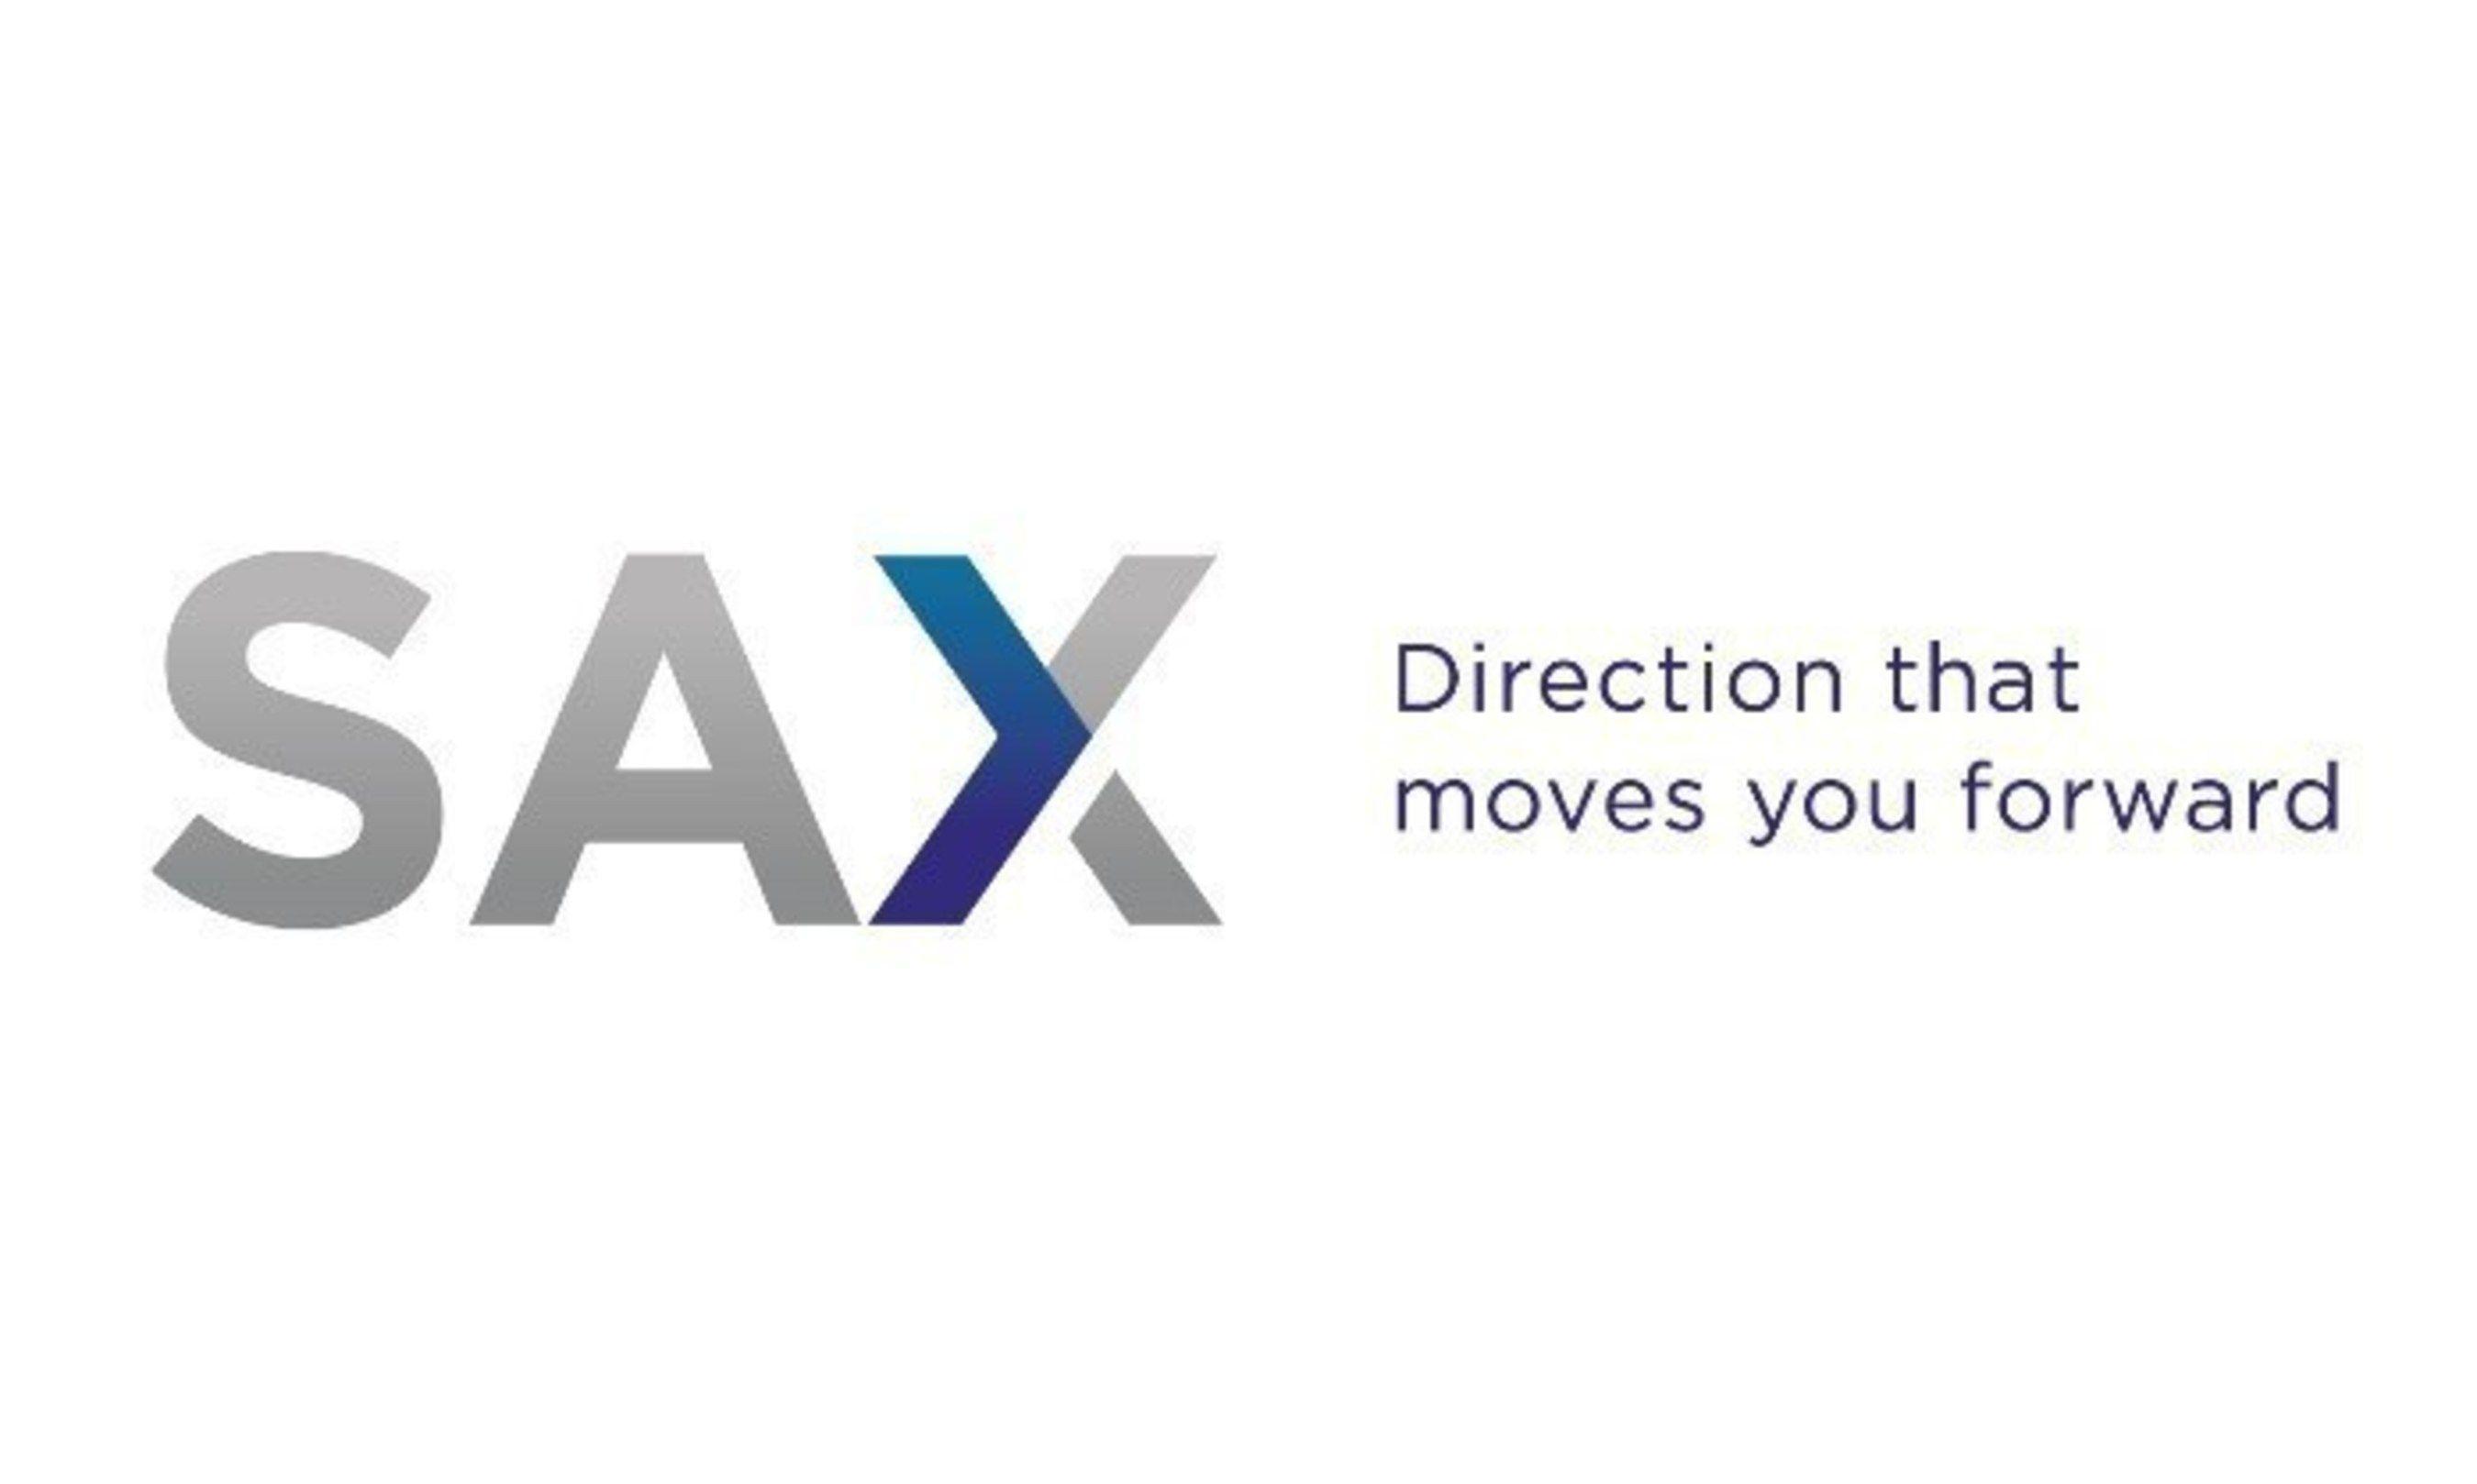 Sax Logo - Regional Accounting Leader Sax LLP Launches Rebranding